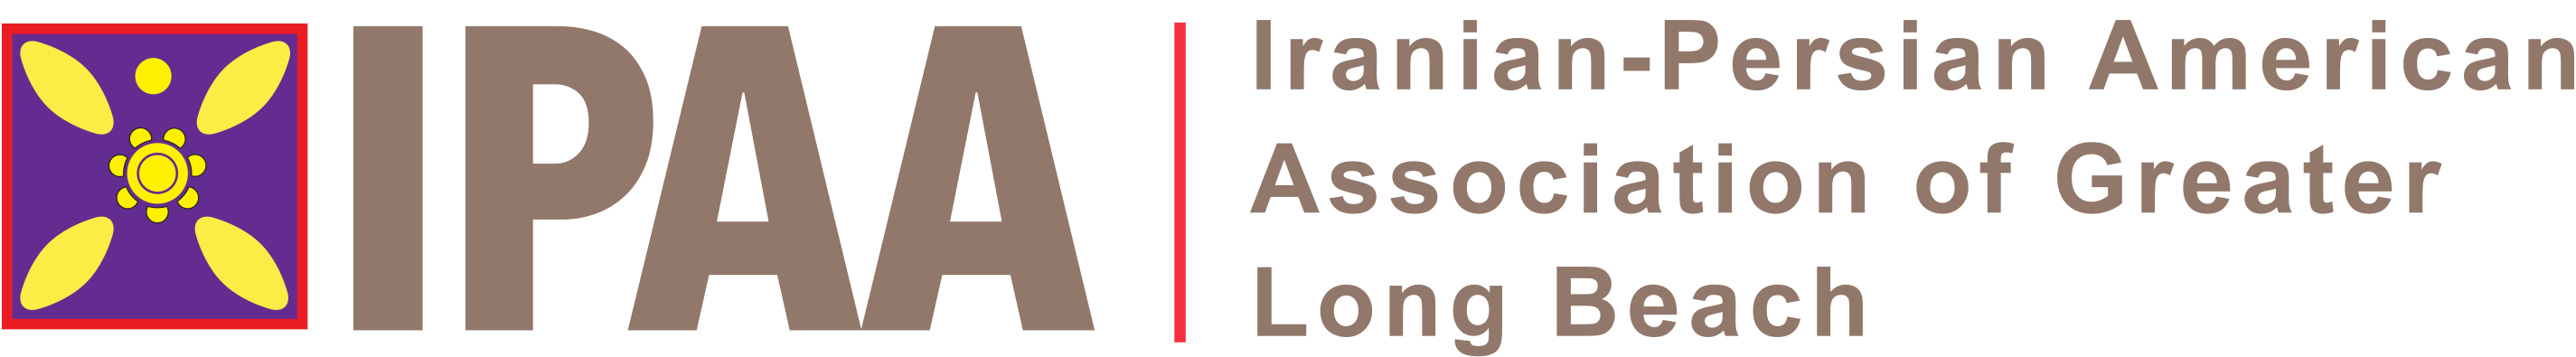 IPAA logo